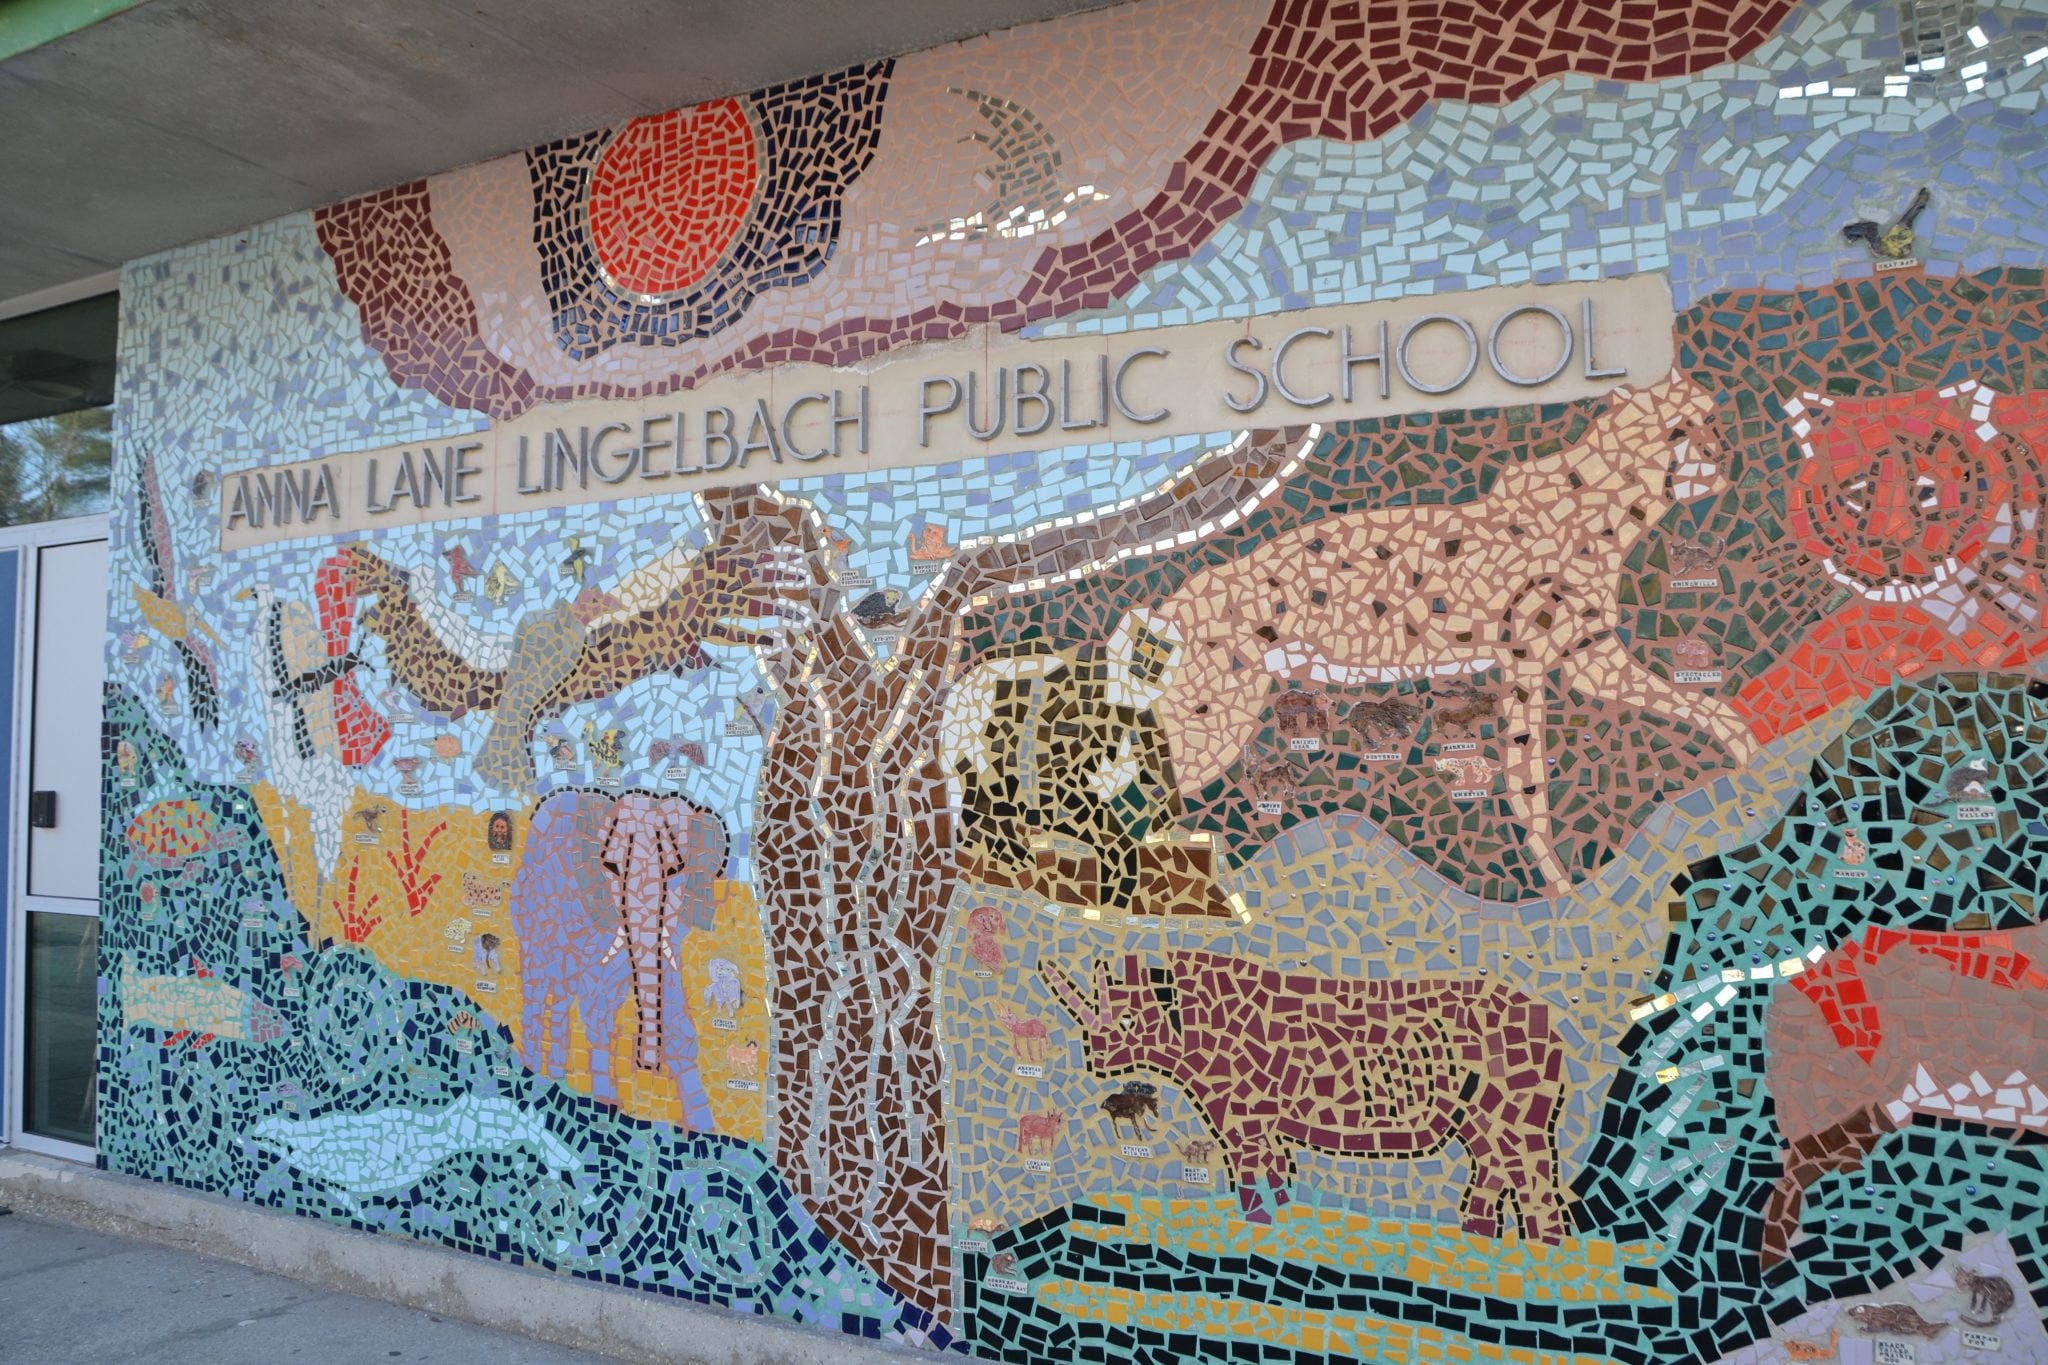 A mosaic wall of a scene of animals at Anna Lane Lingelbach Public School.